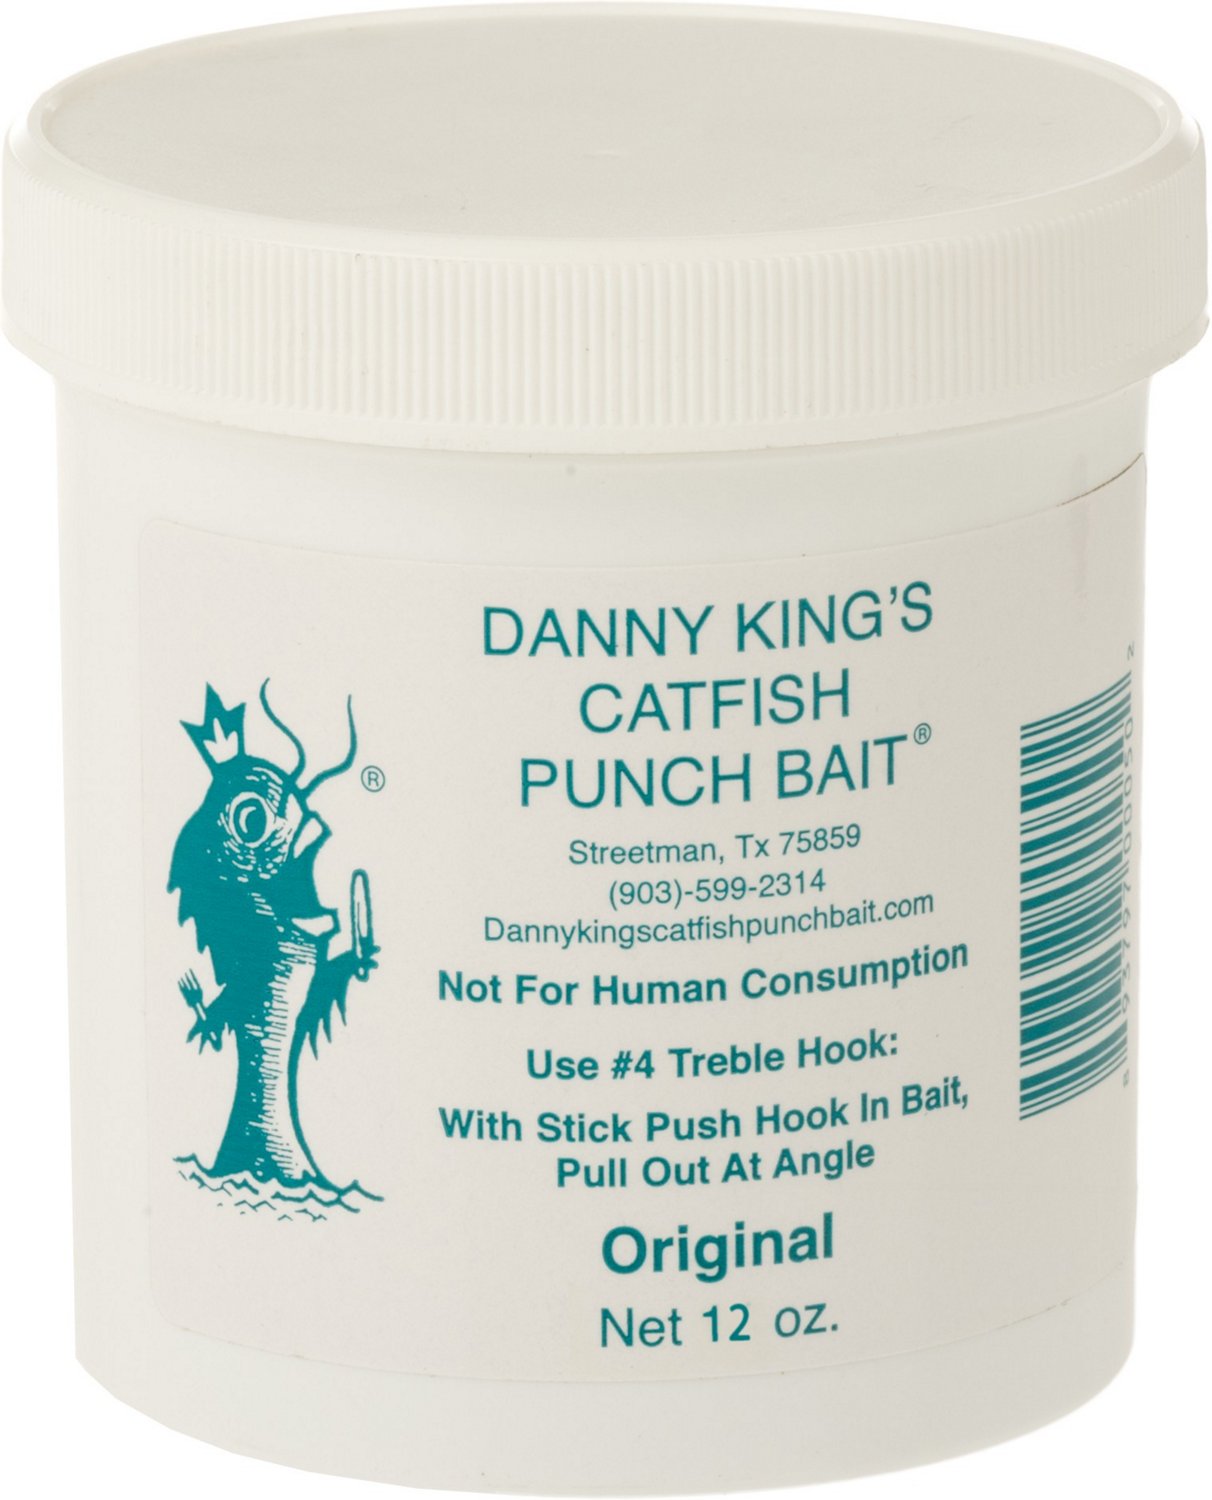 Danny King's 12 oz. Catfish Punch Bait